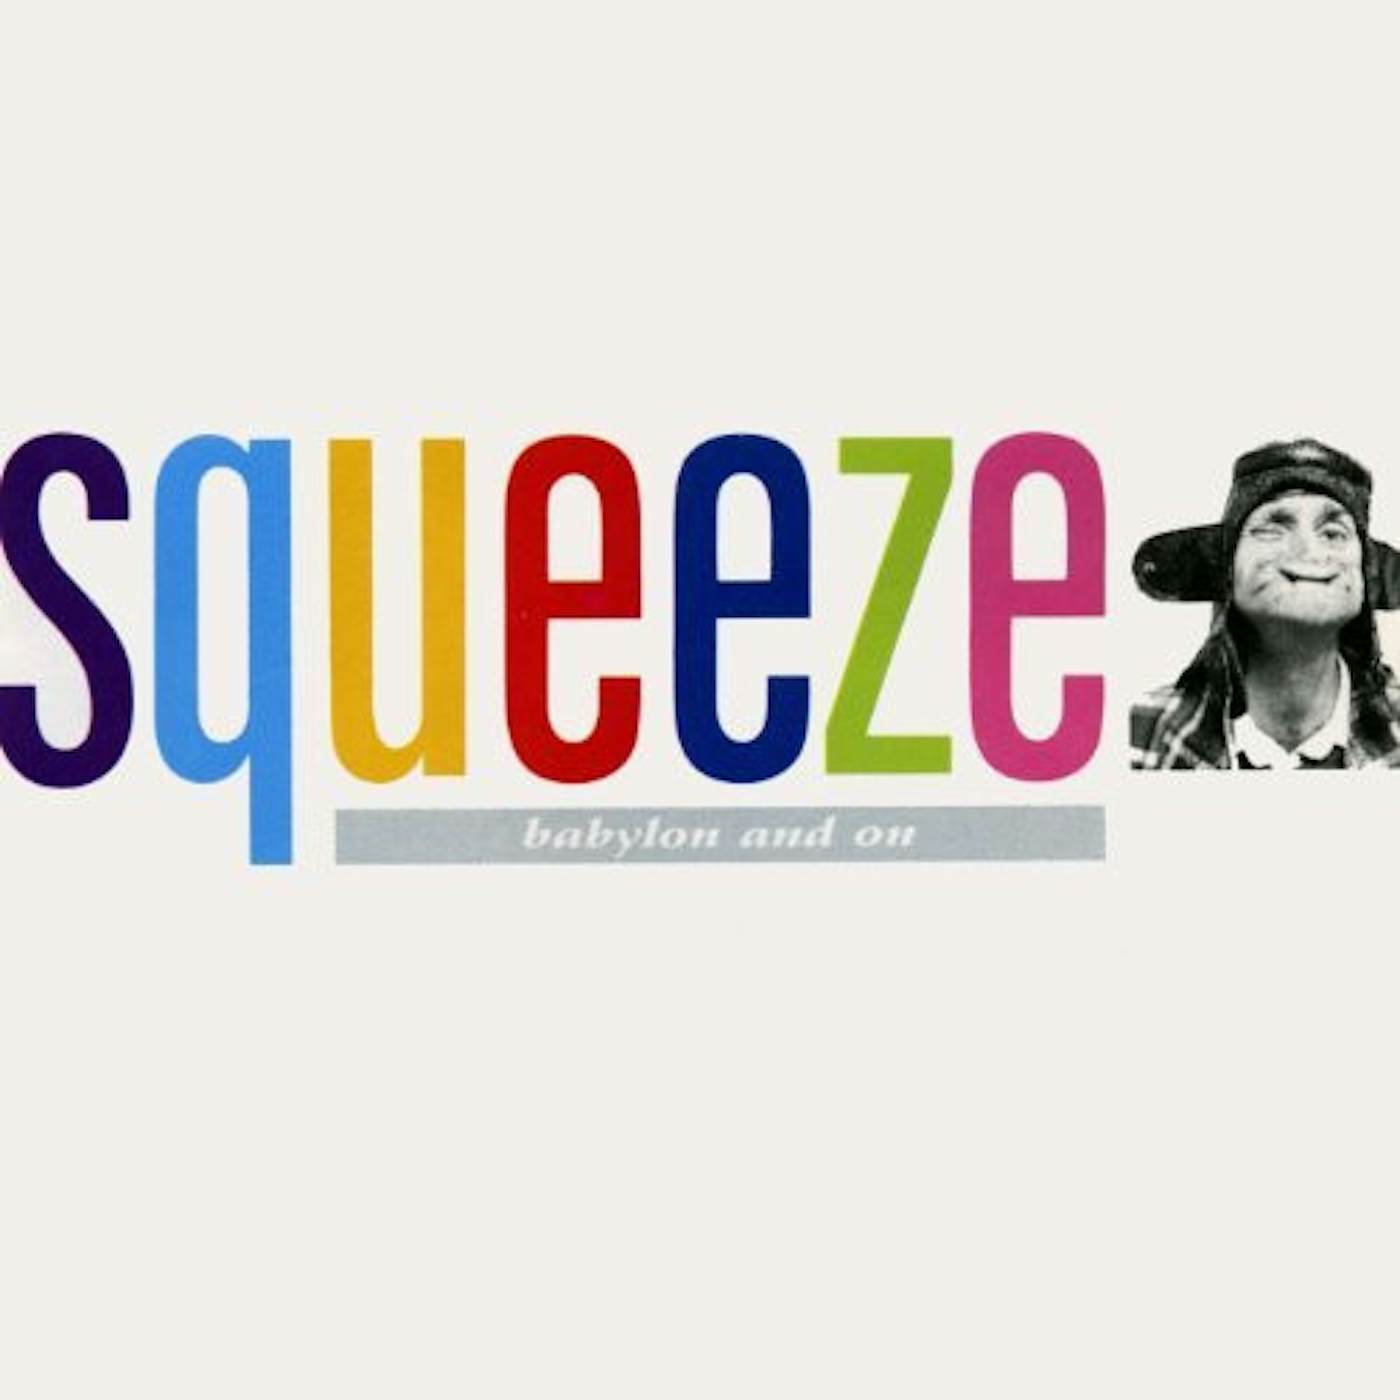 Squeeze Babylon And On Vinyl Record